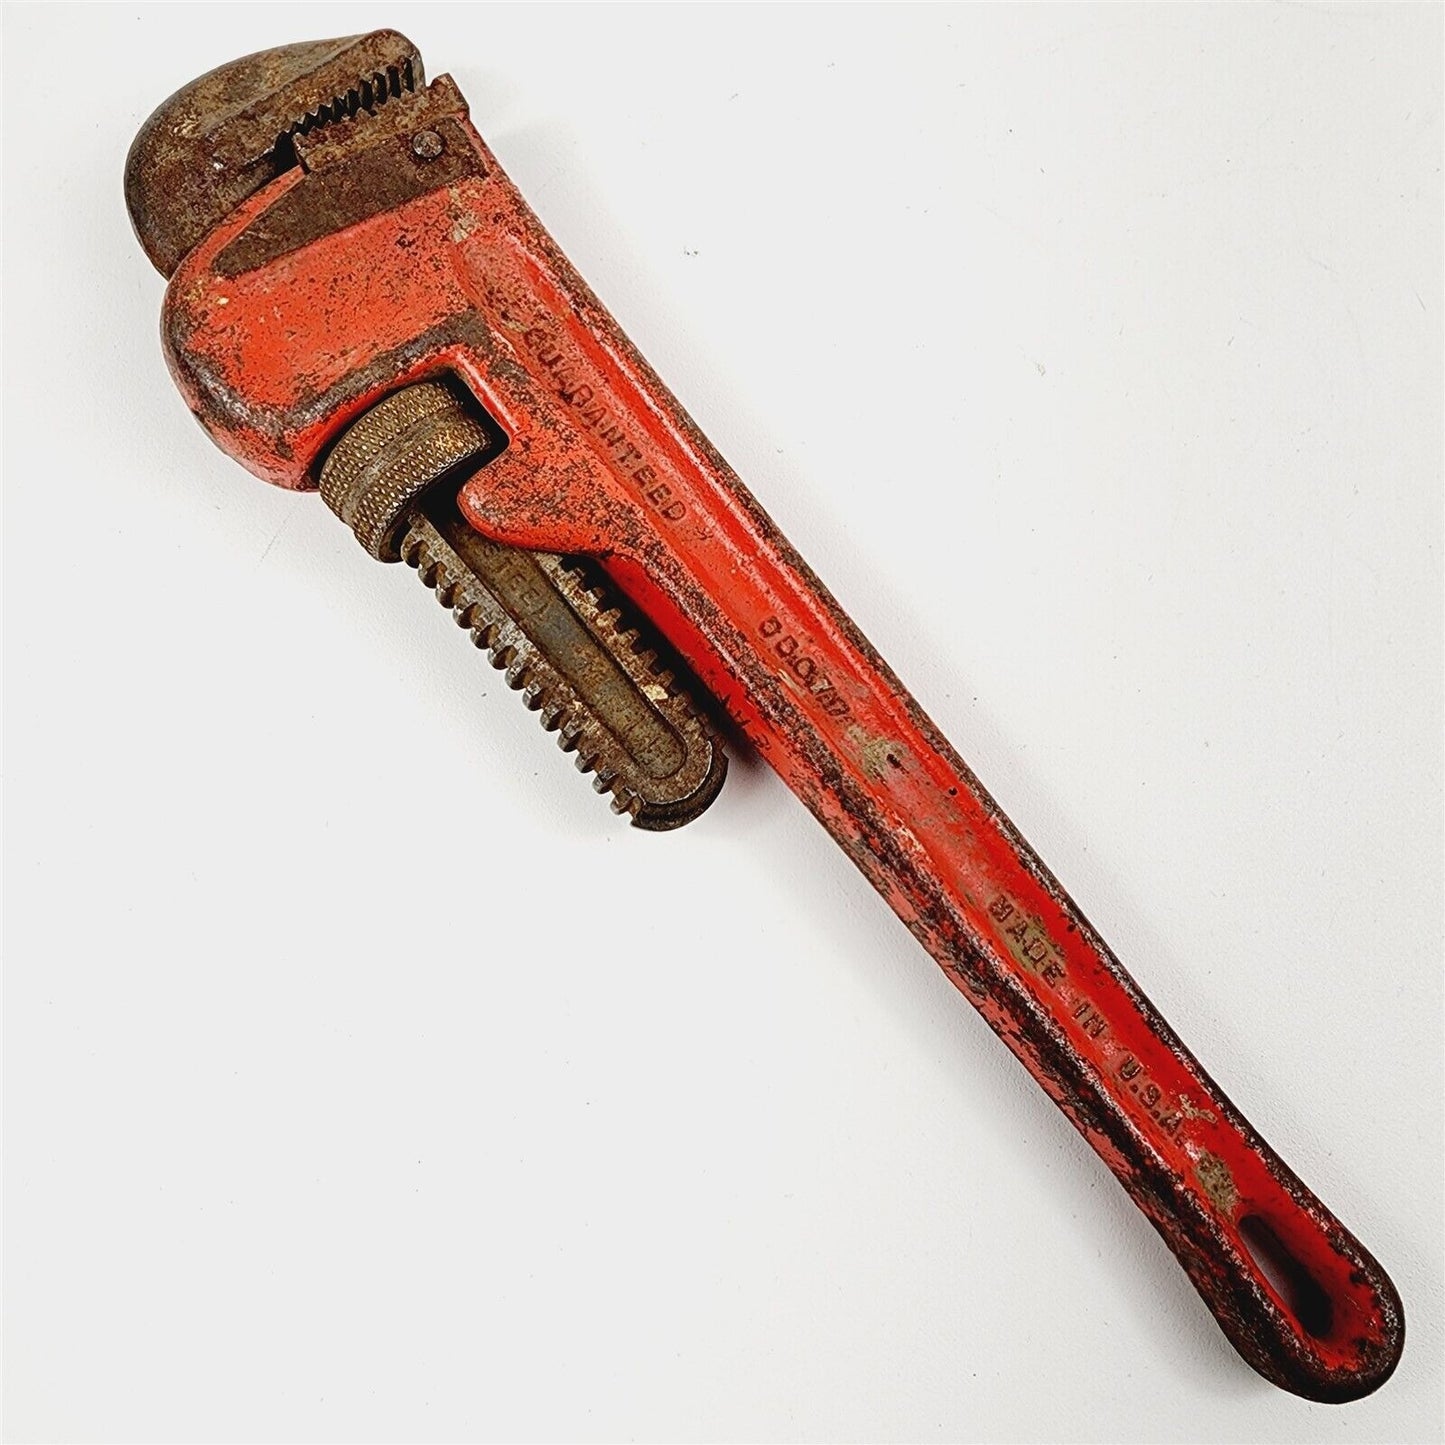 Craftsman Pipe Wrench #55677 USA - 14"